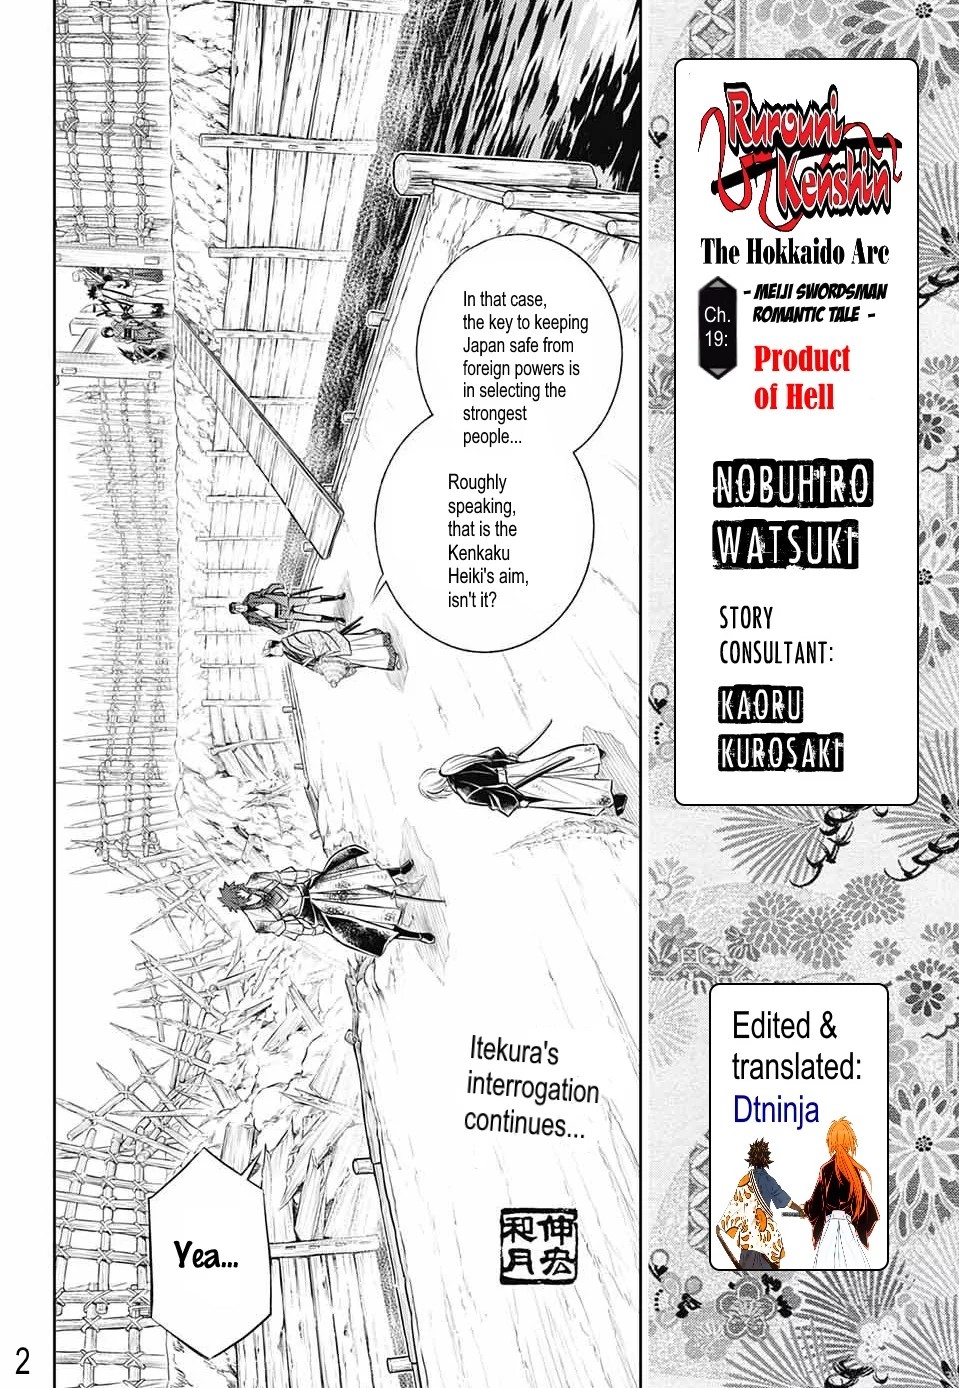 Rurouni Kenshin: Hokkaido Arc Chapter 19: Product Of Hell - Picture 2